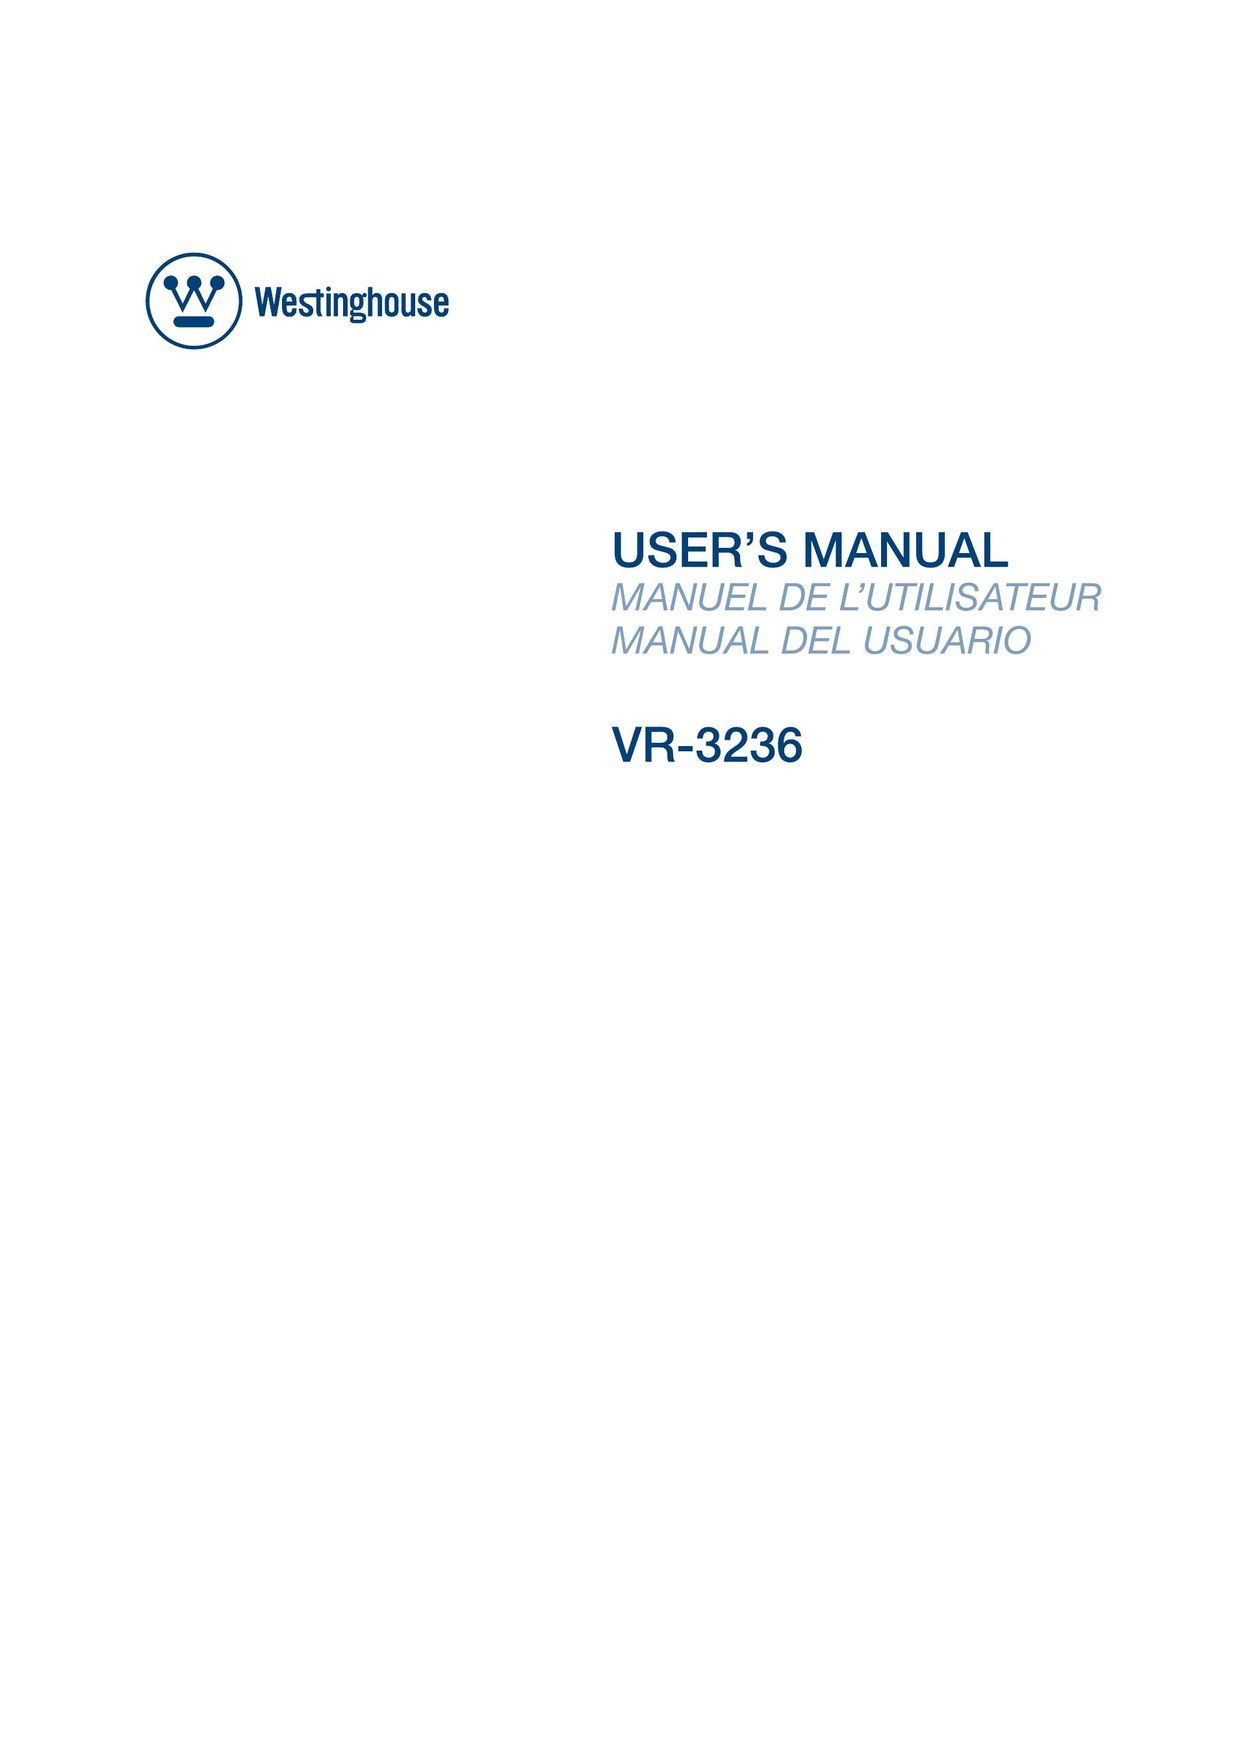 Westinghouse VR-3236 Model Vehicle User Manual